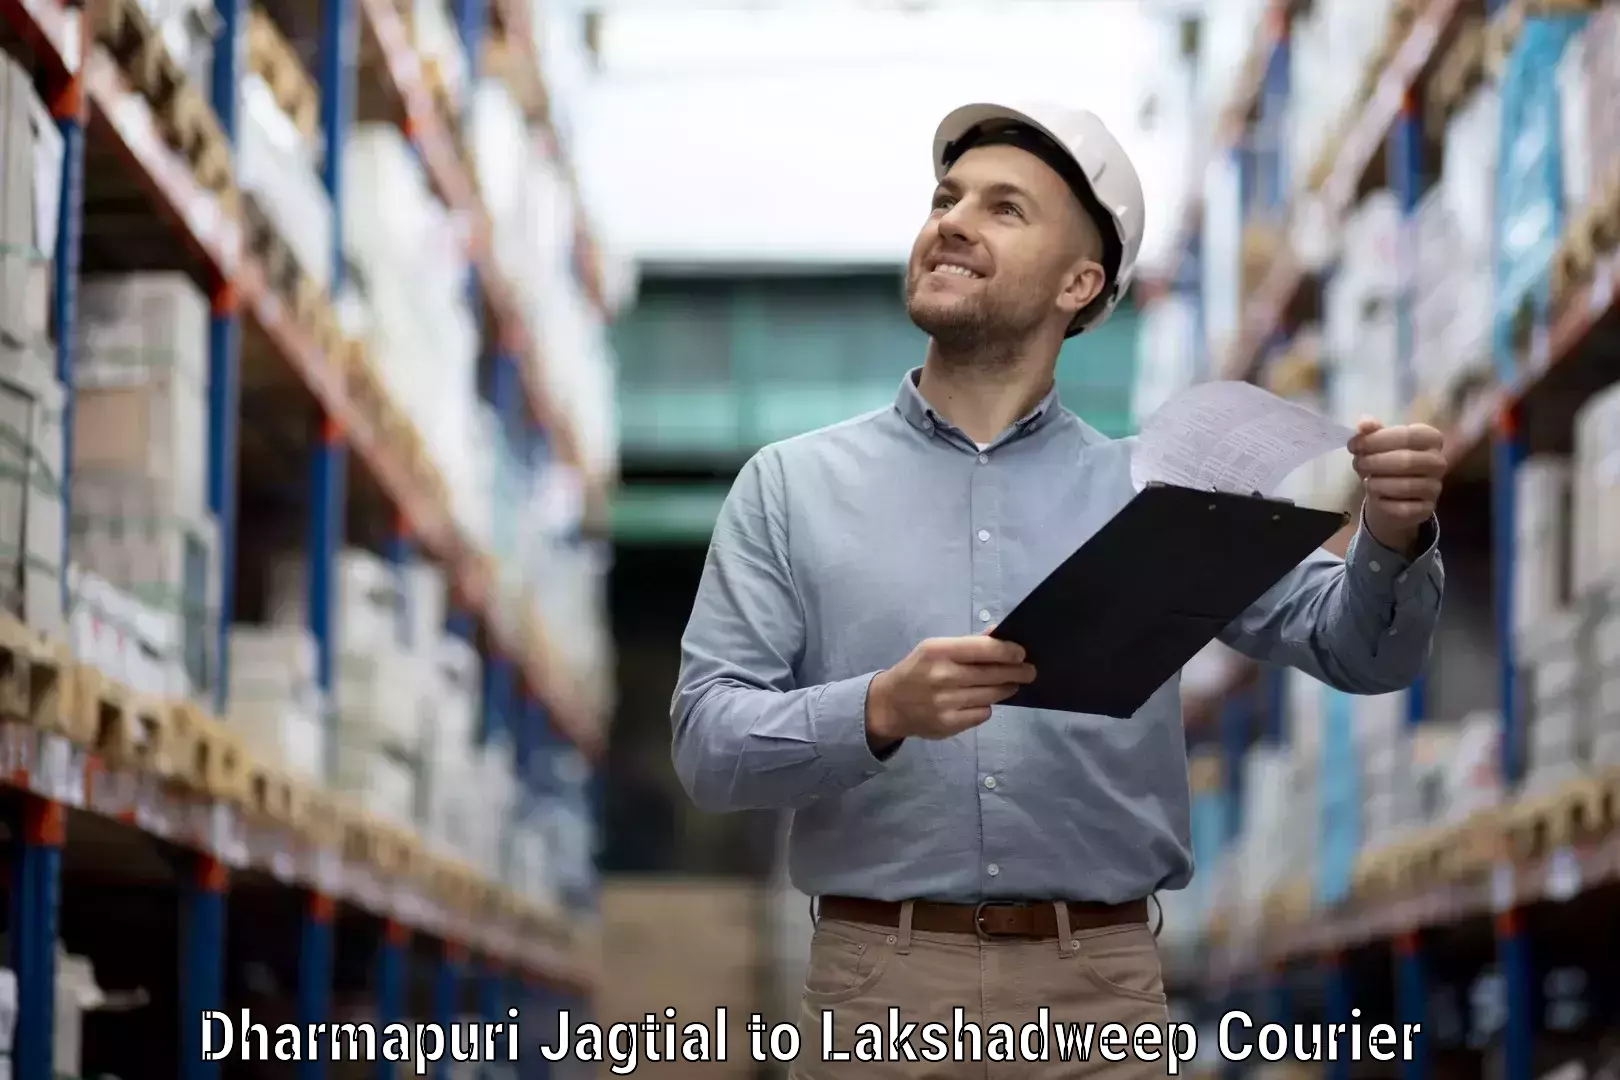 Holiday shipping services Dharmapuri Jagtial to Lakshadweep